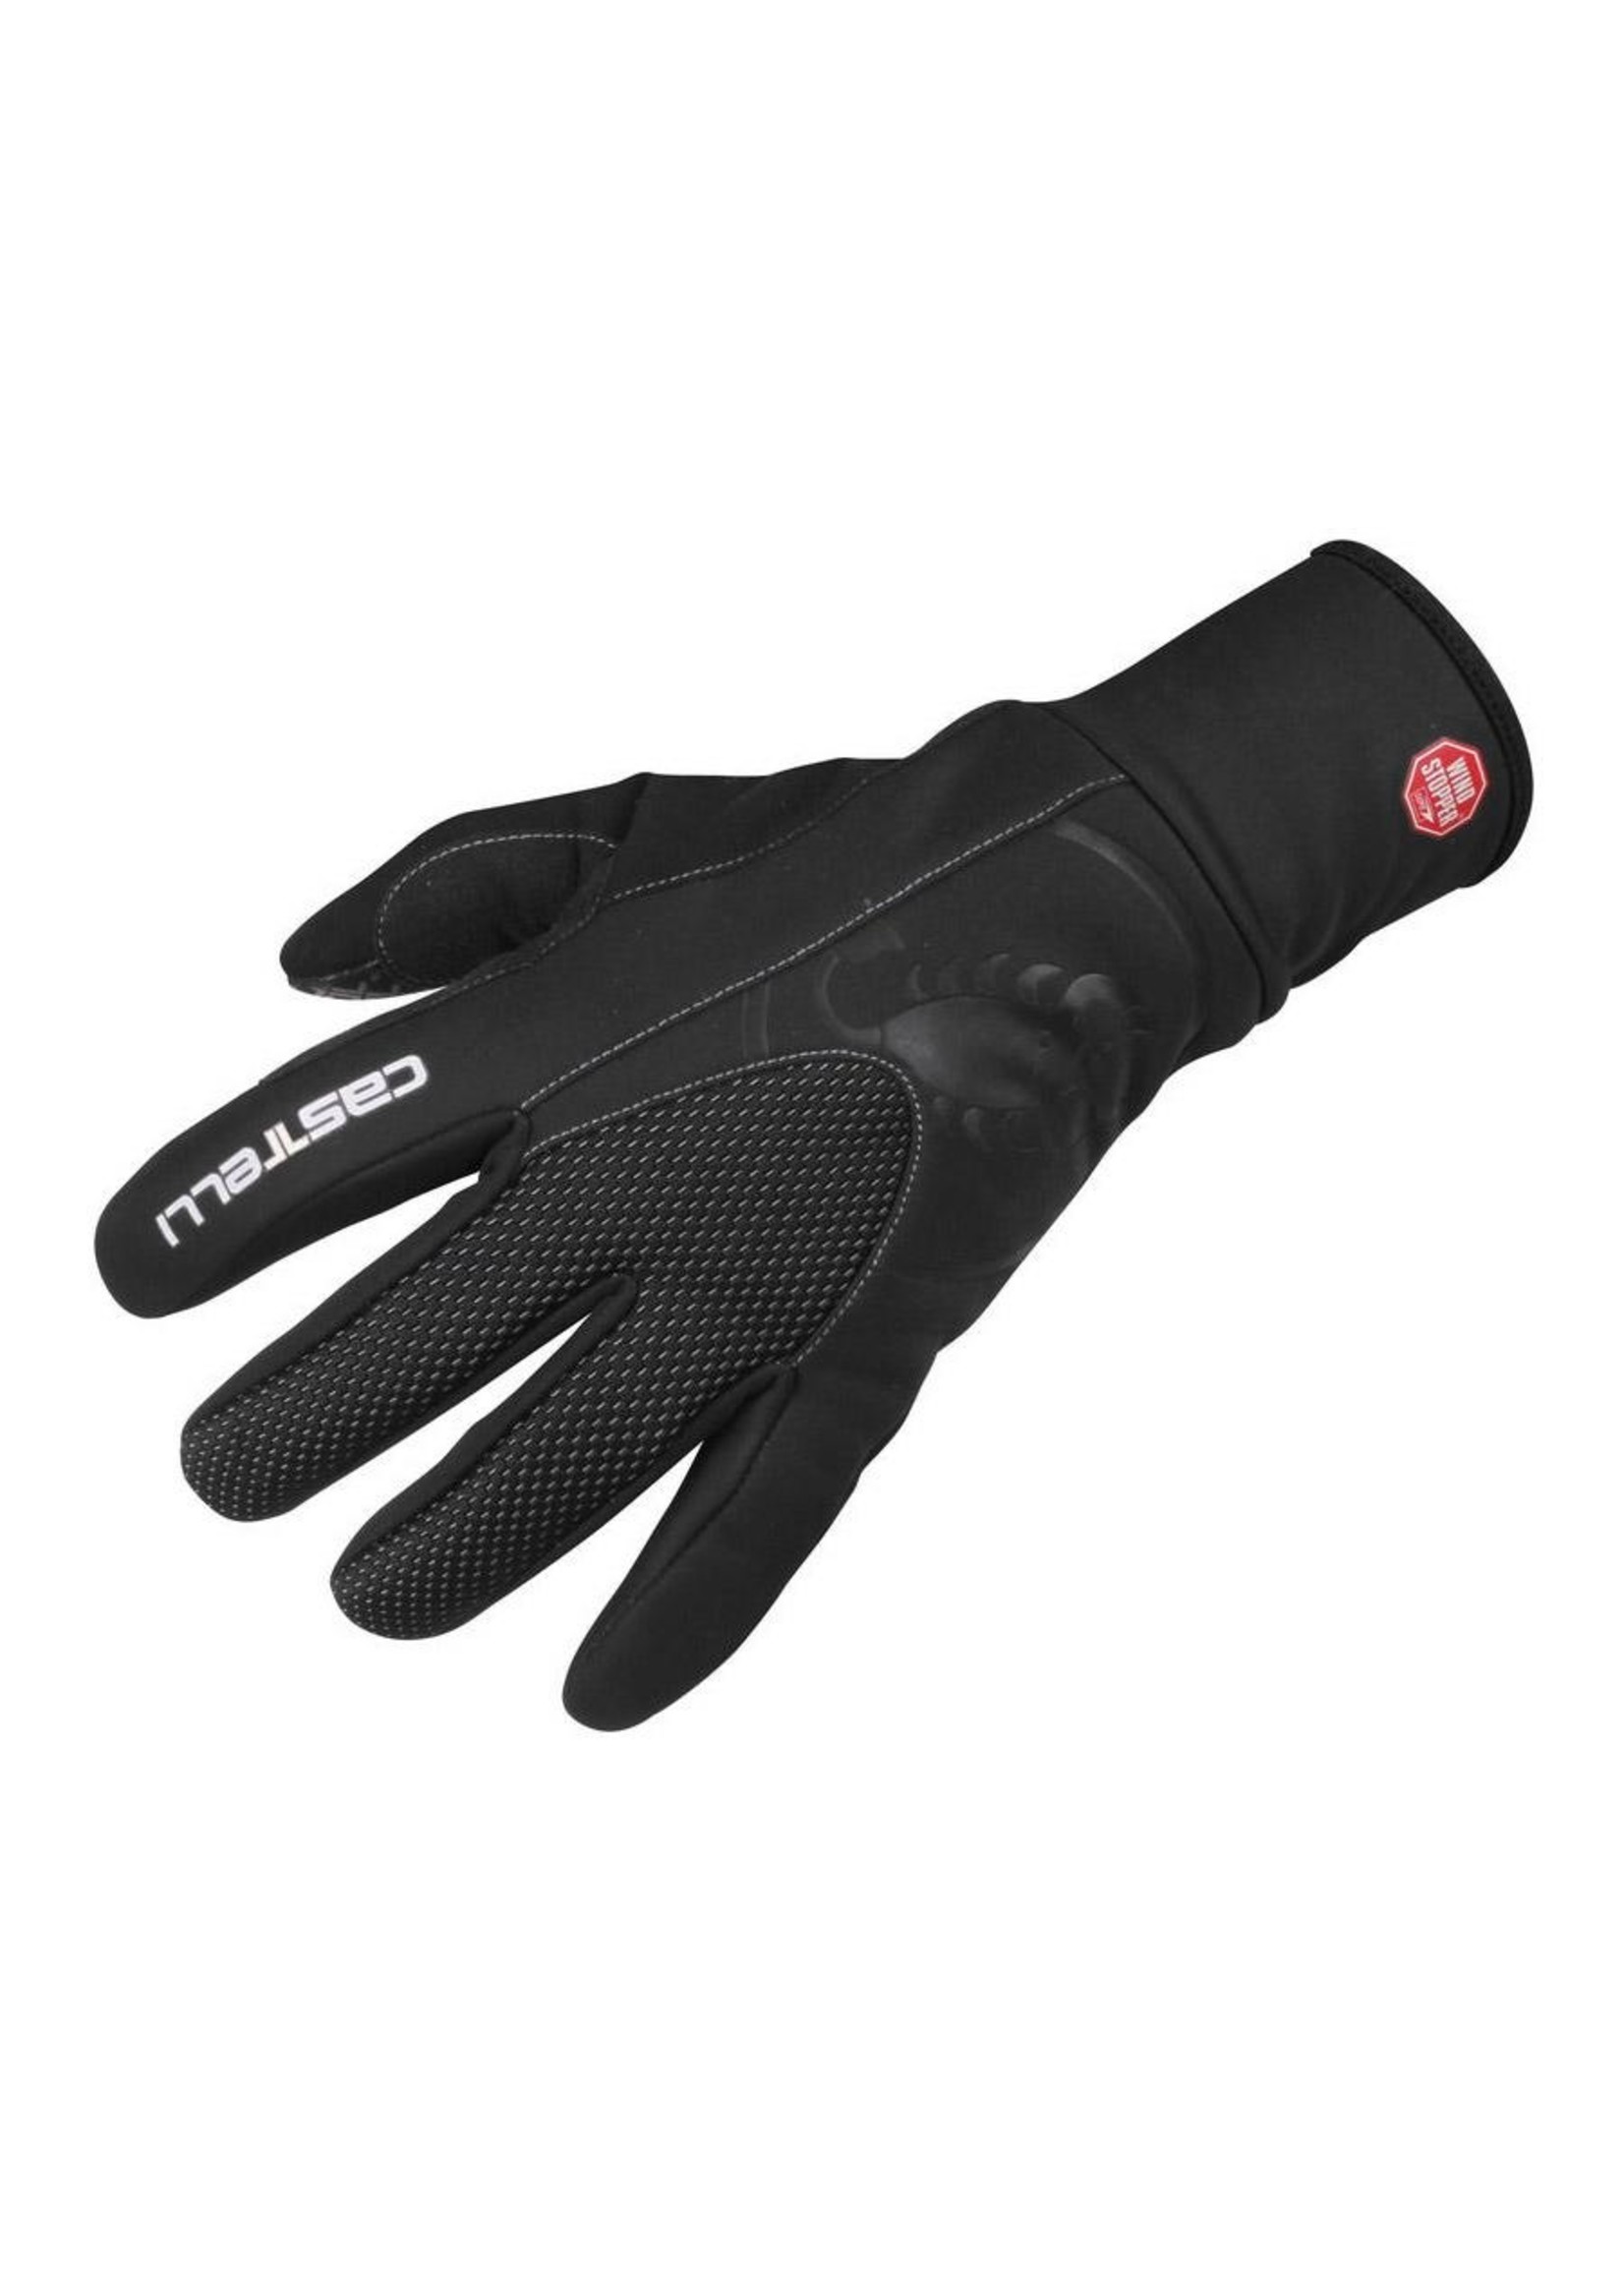 Castelli Estremo Glove -black -XL